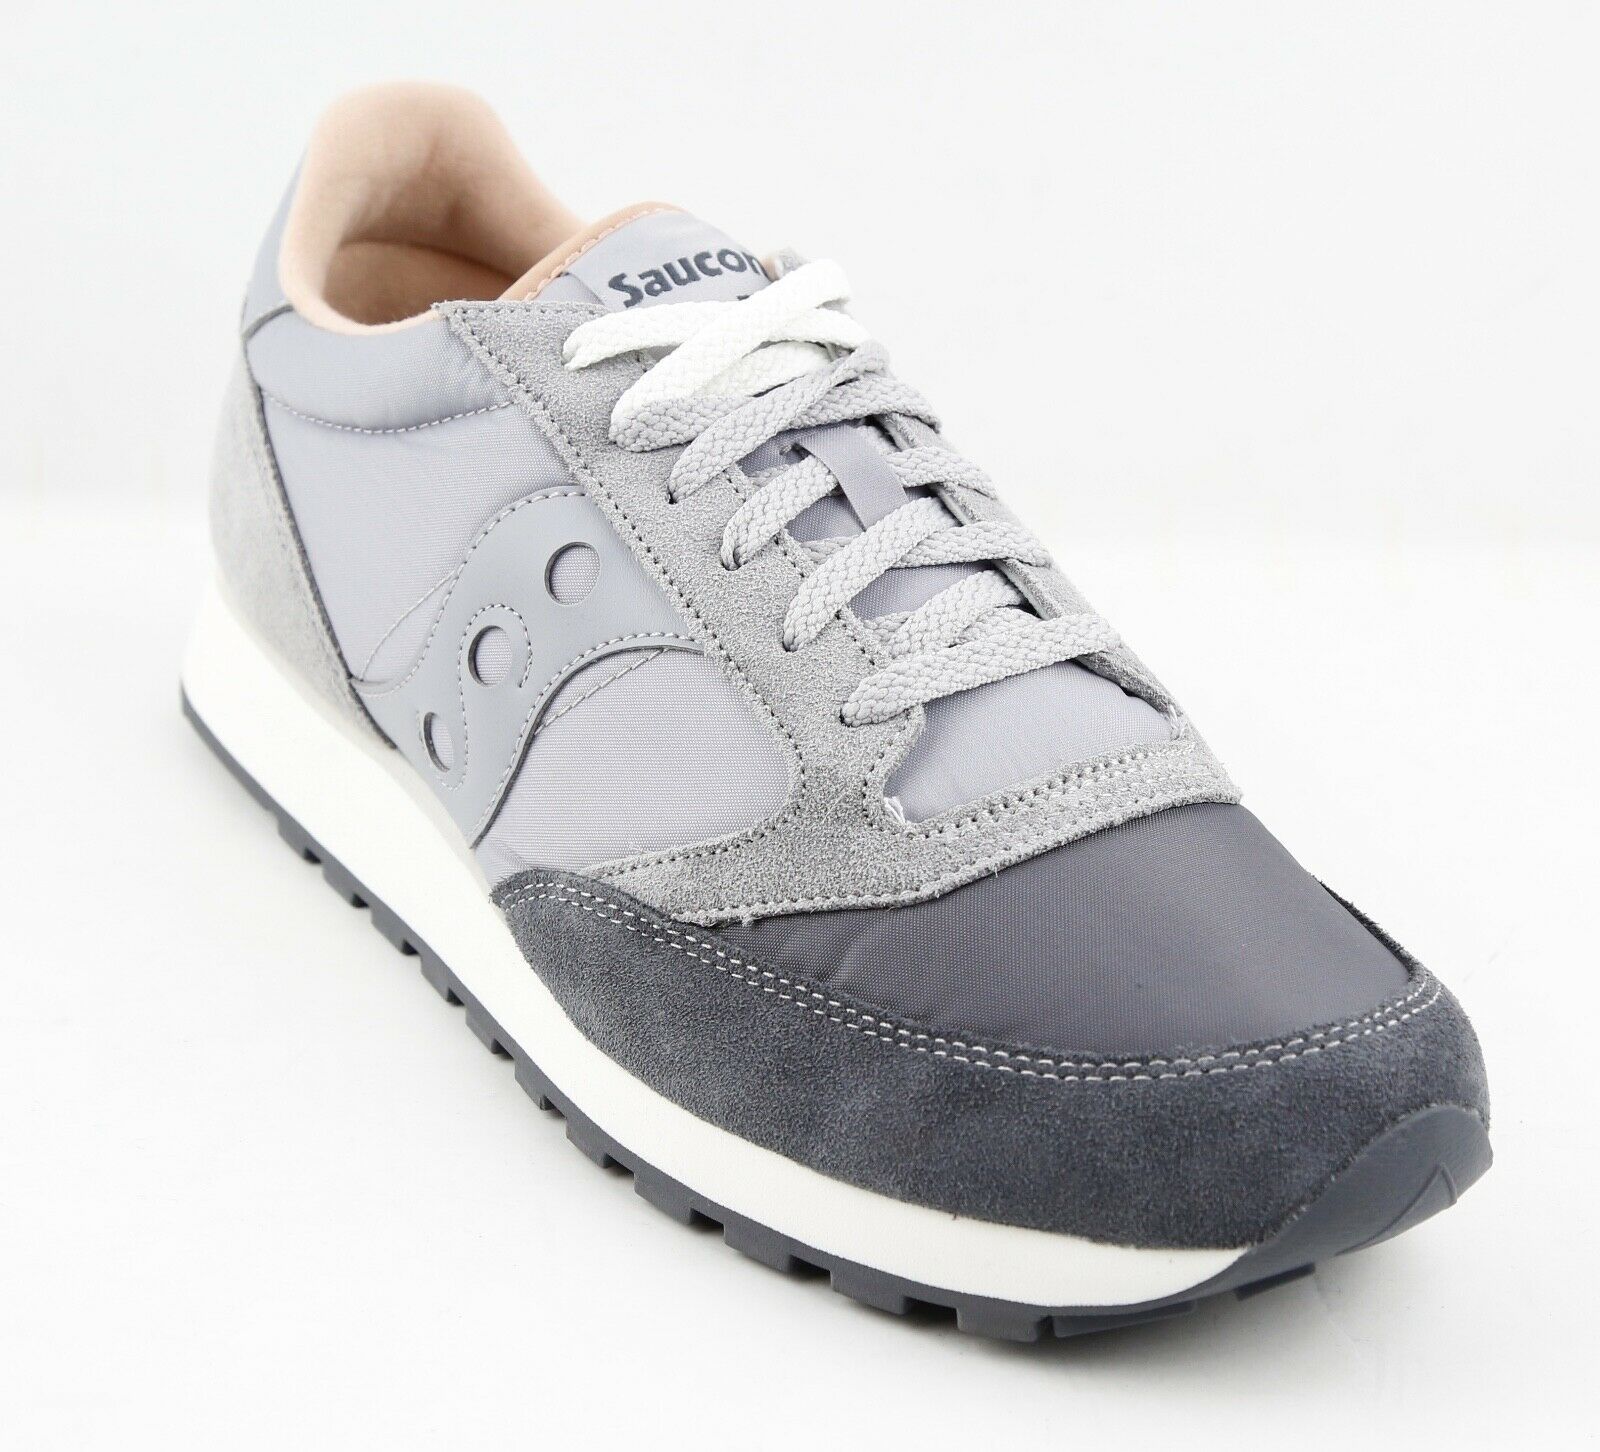 Mens Saucony Originals Jazz Original Sneaker - Grey/Light Grey, Size 14 ...